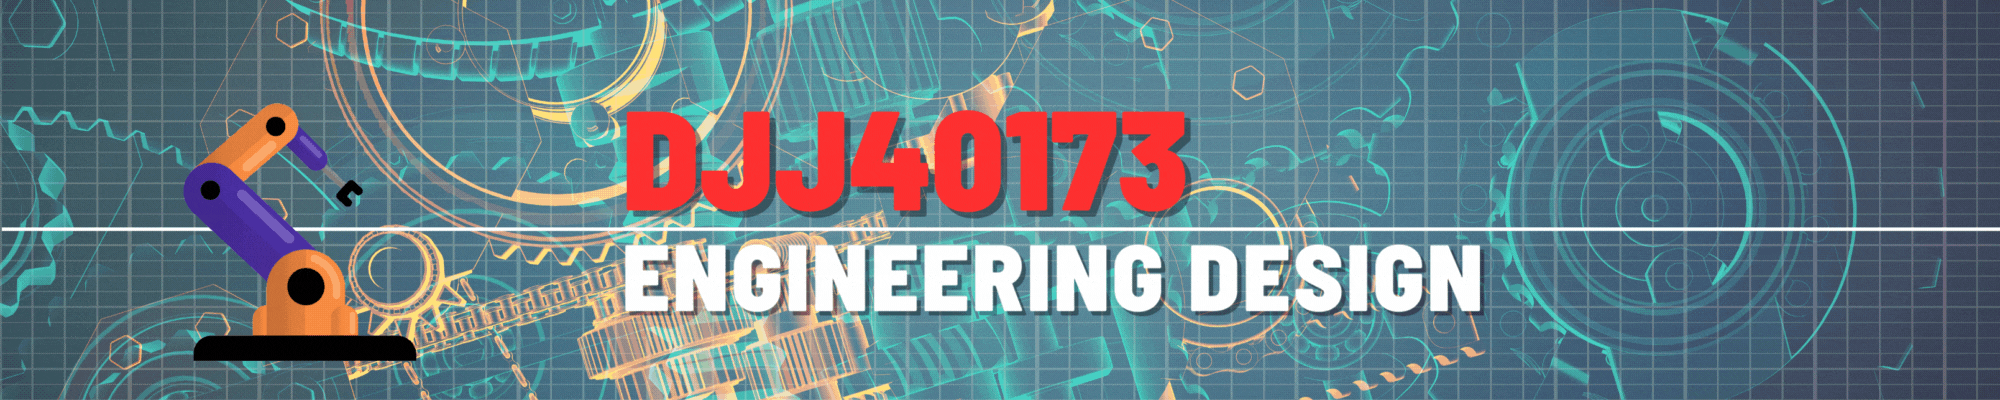 DJJ40173 ENGINEERING DESIGN